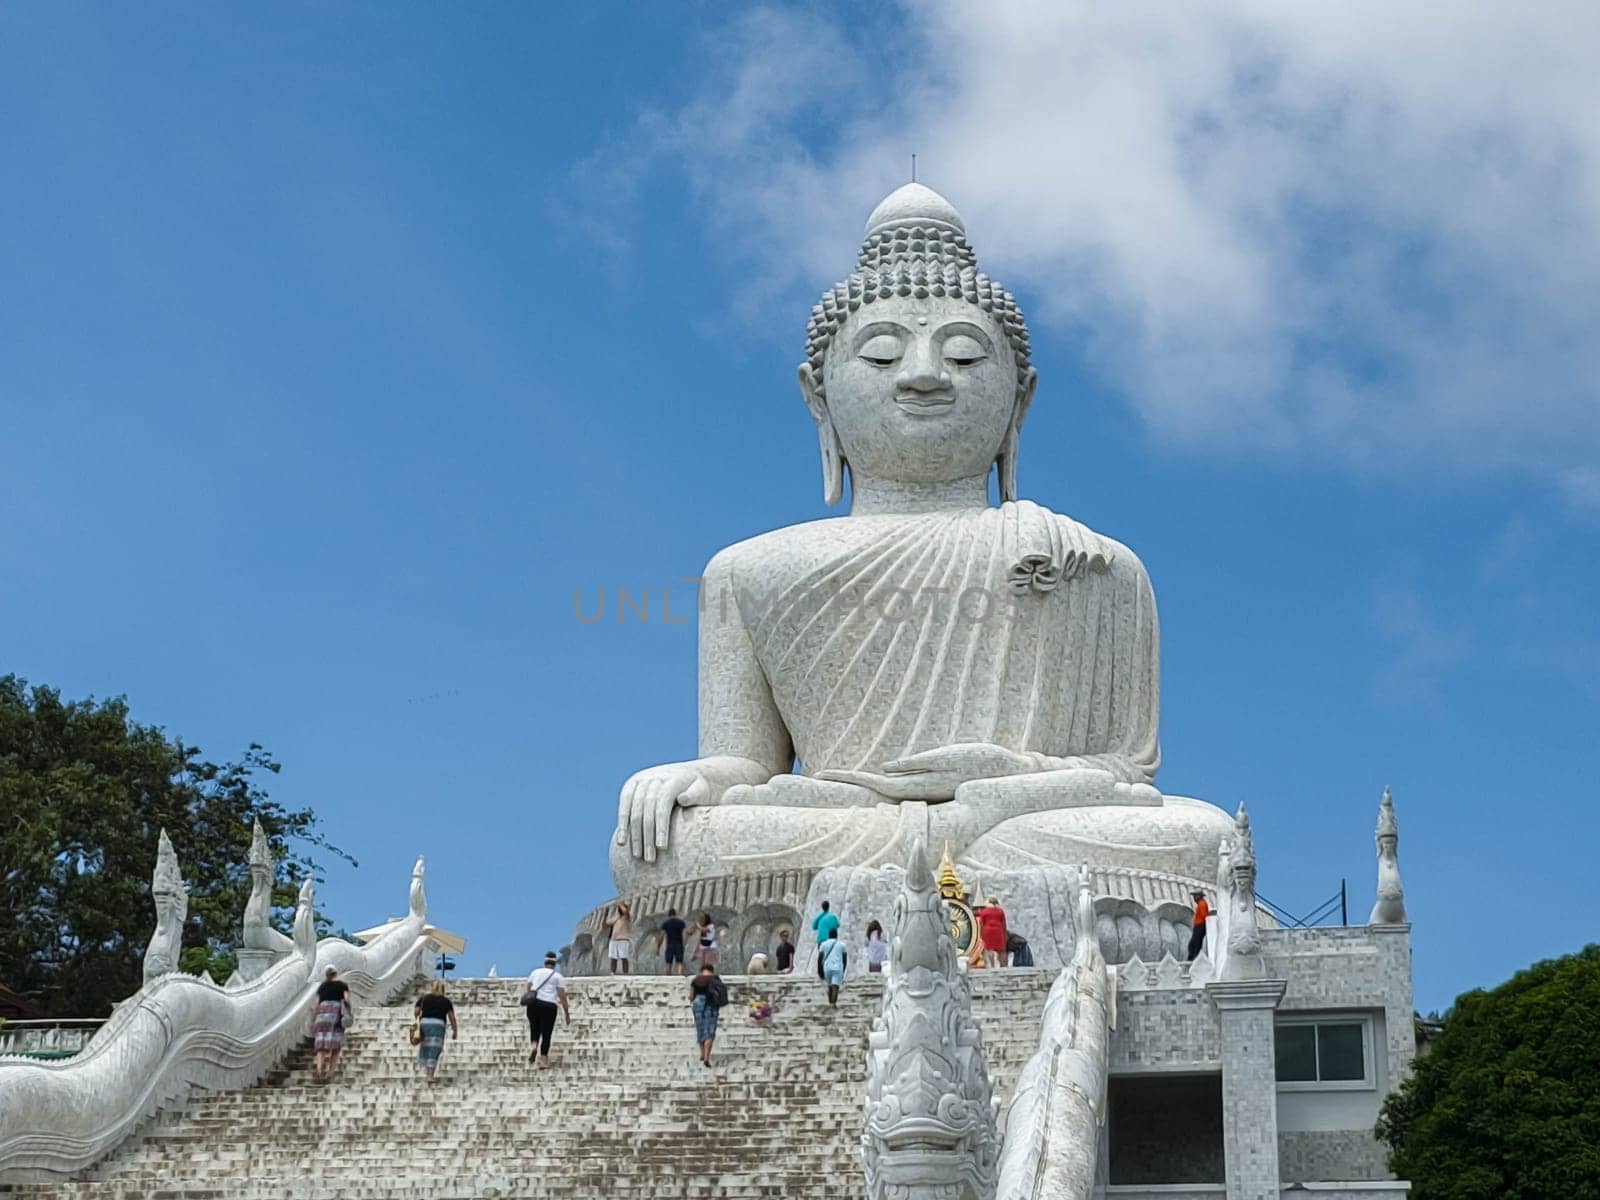 Statue of Big Buddha in Phuket, Thailand by Elenaphotos21